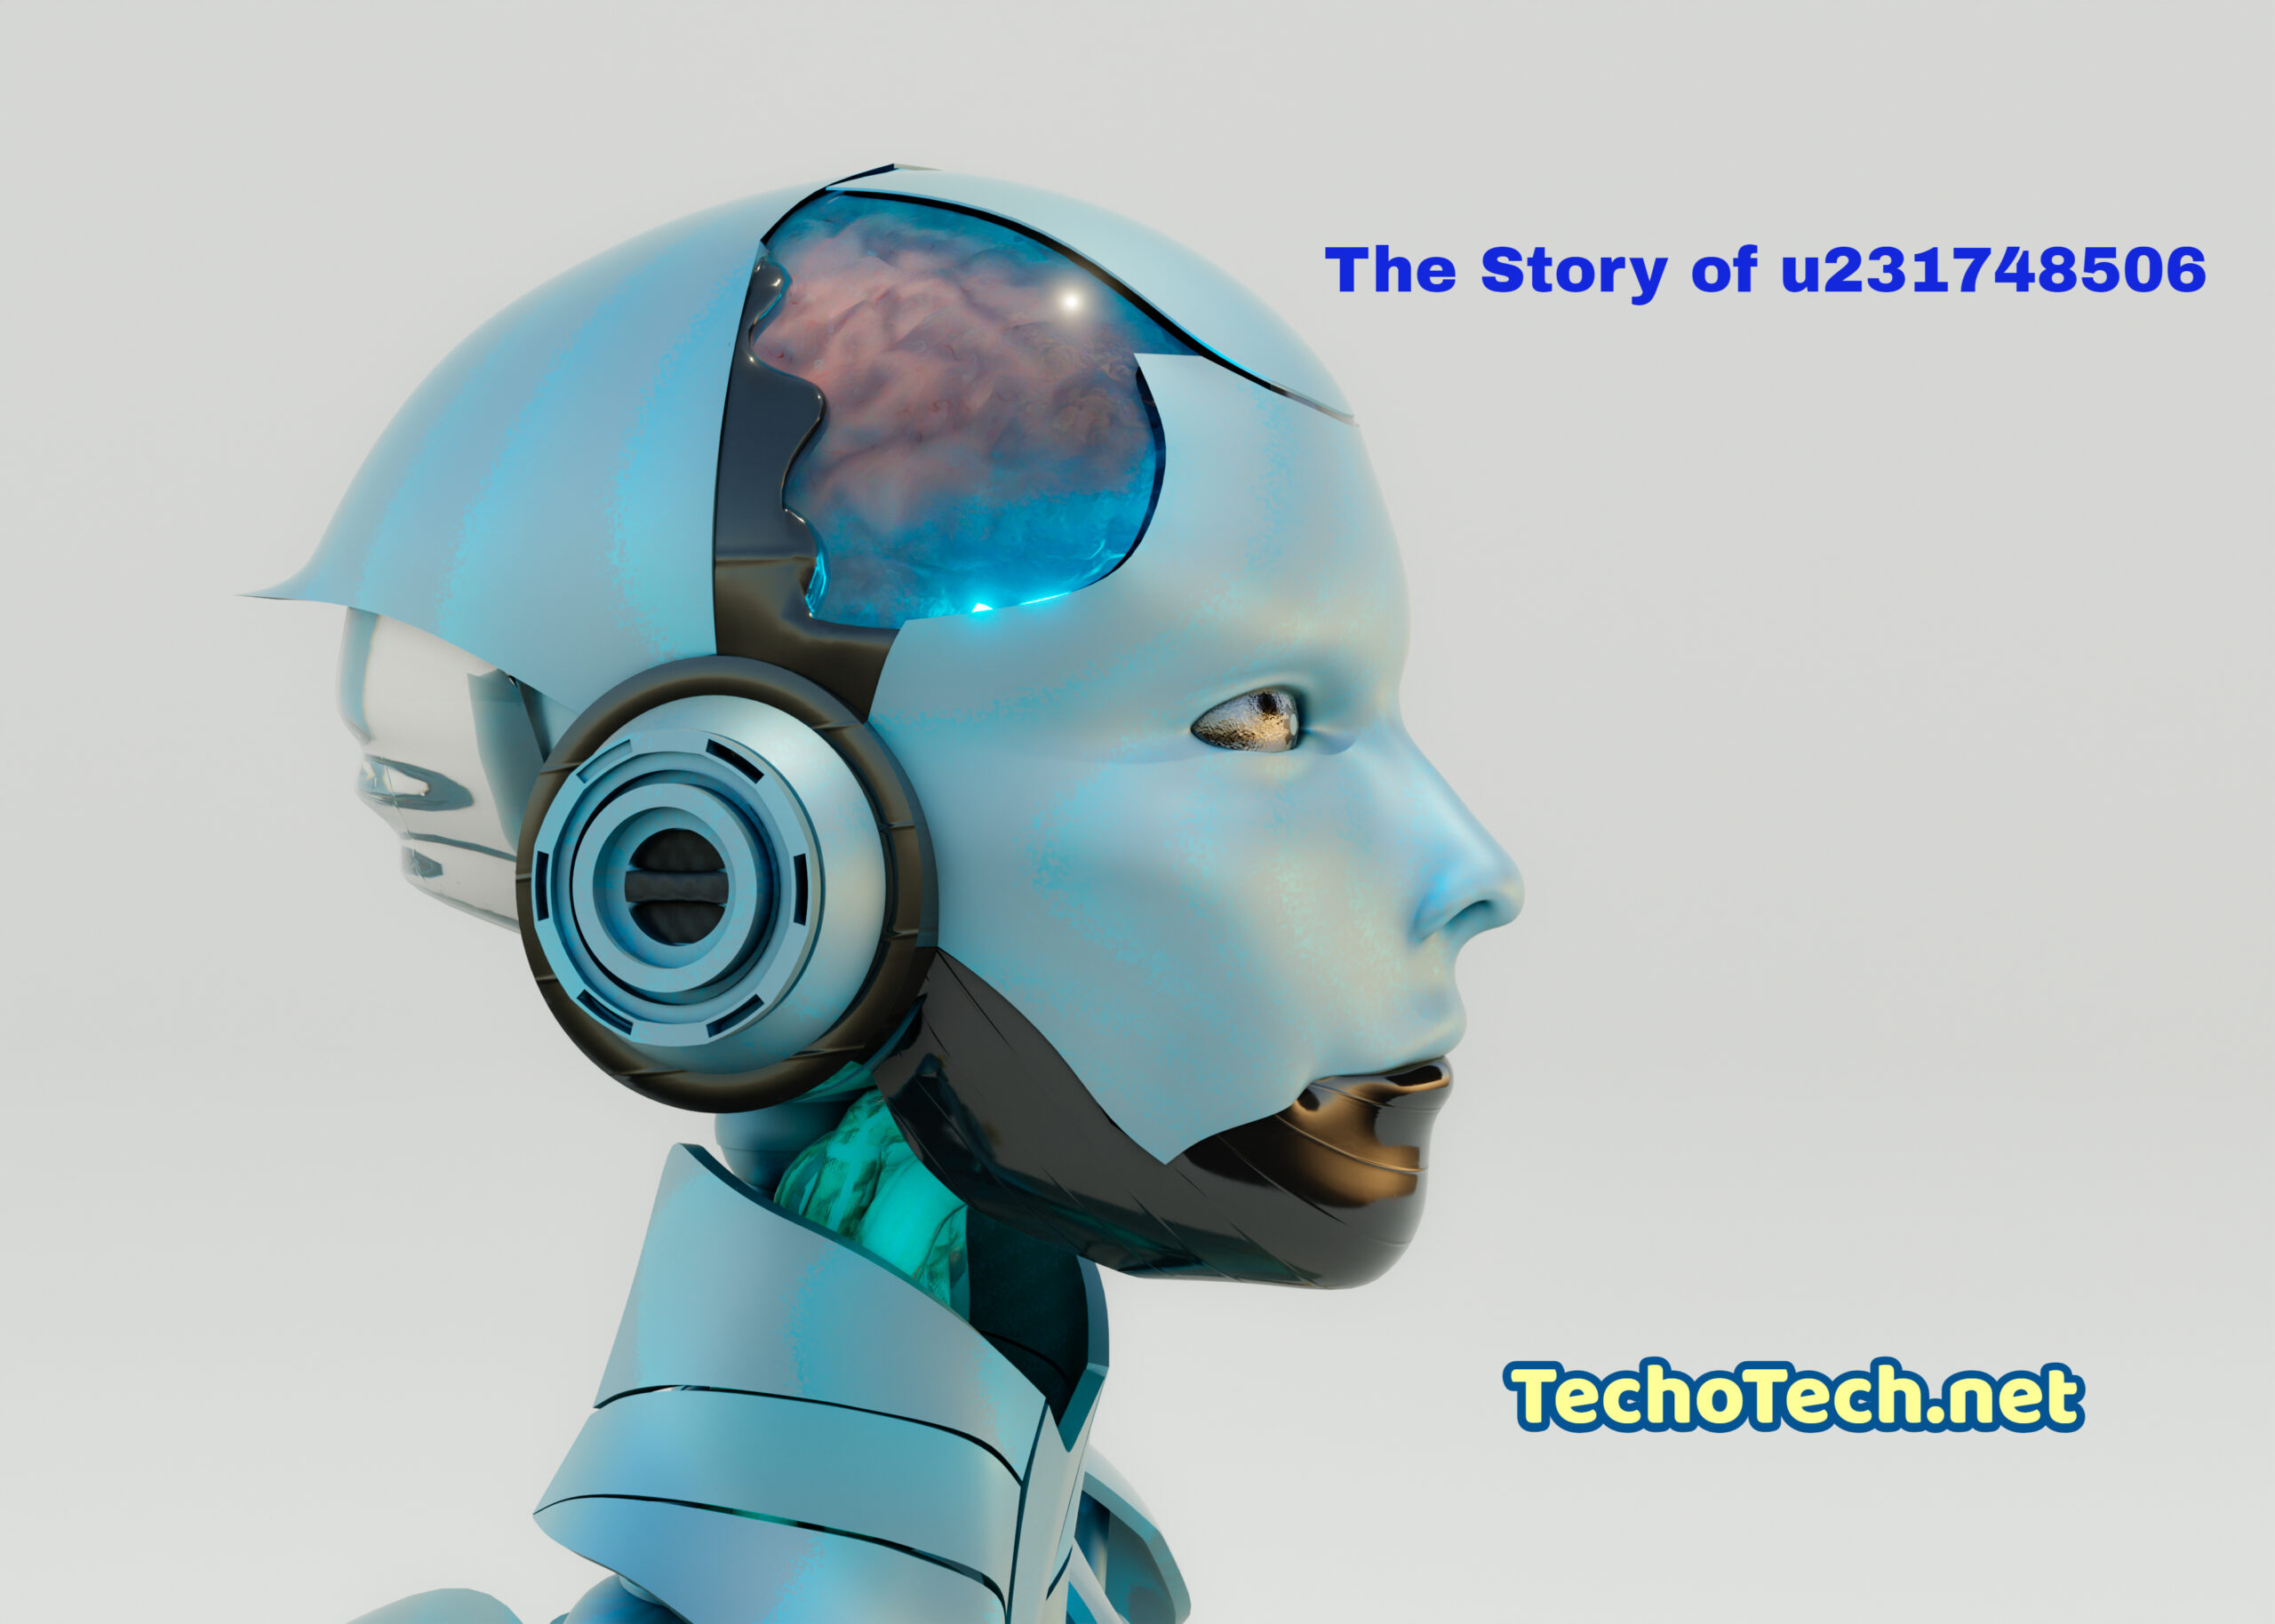 Codebreaker Chronicles: The Story of u231748506